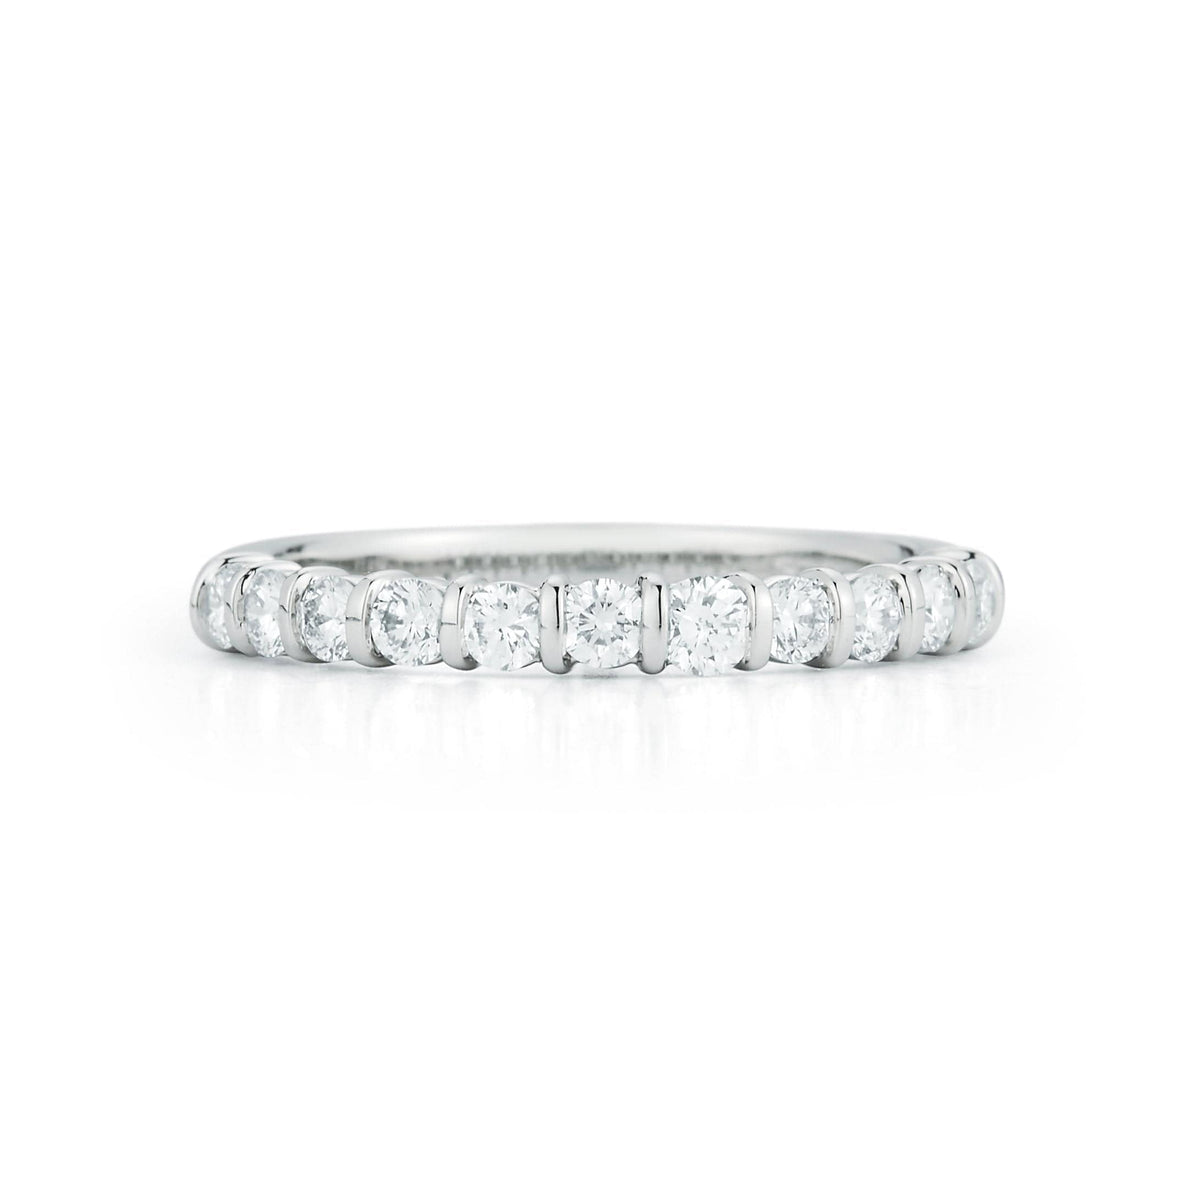 Platinum 11 Stone Bar Set Diamond Wedding Ring